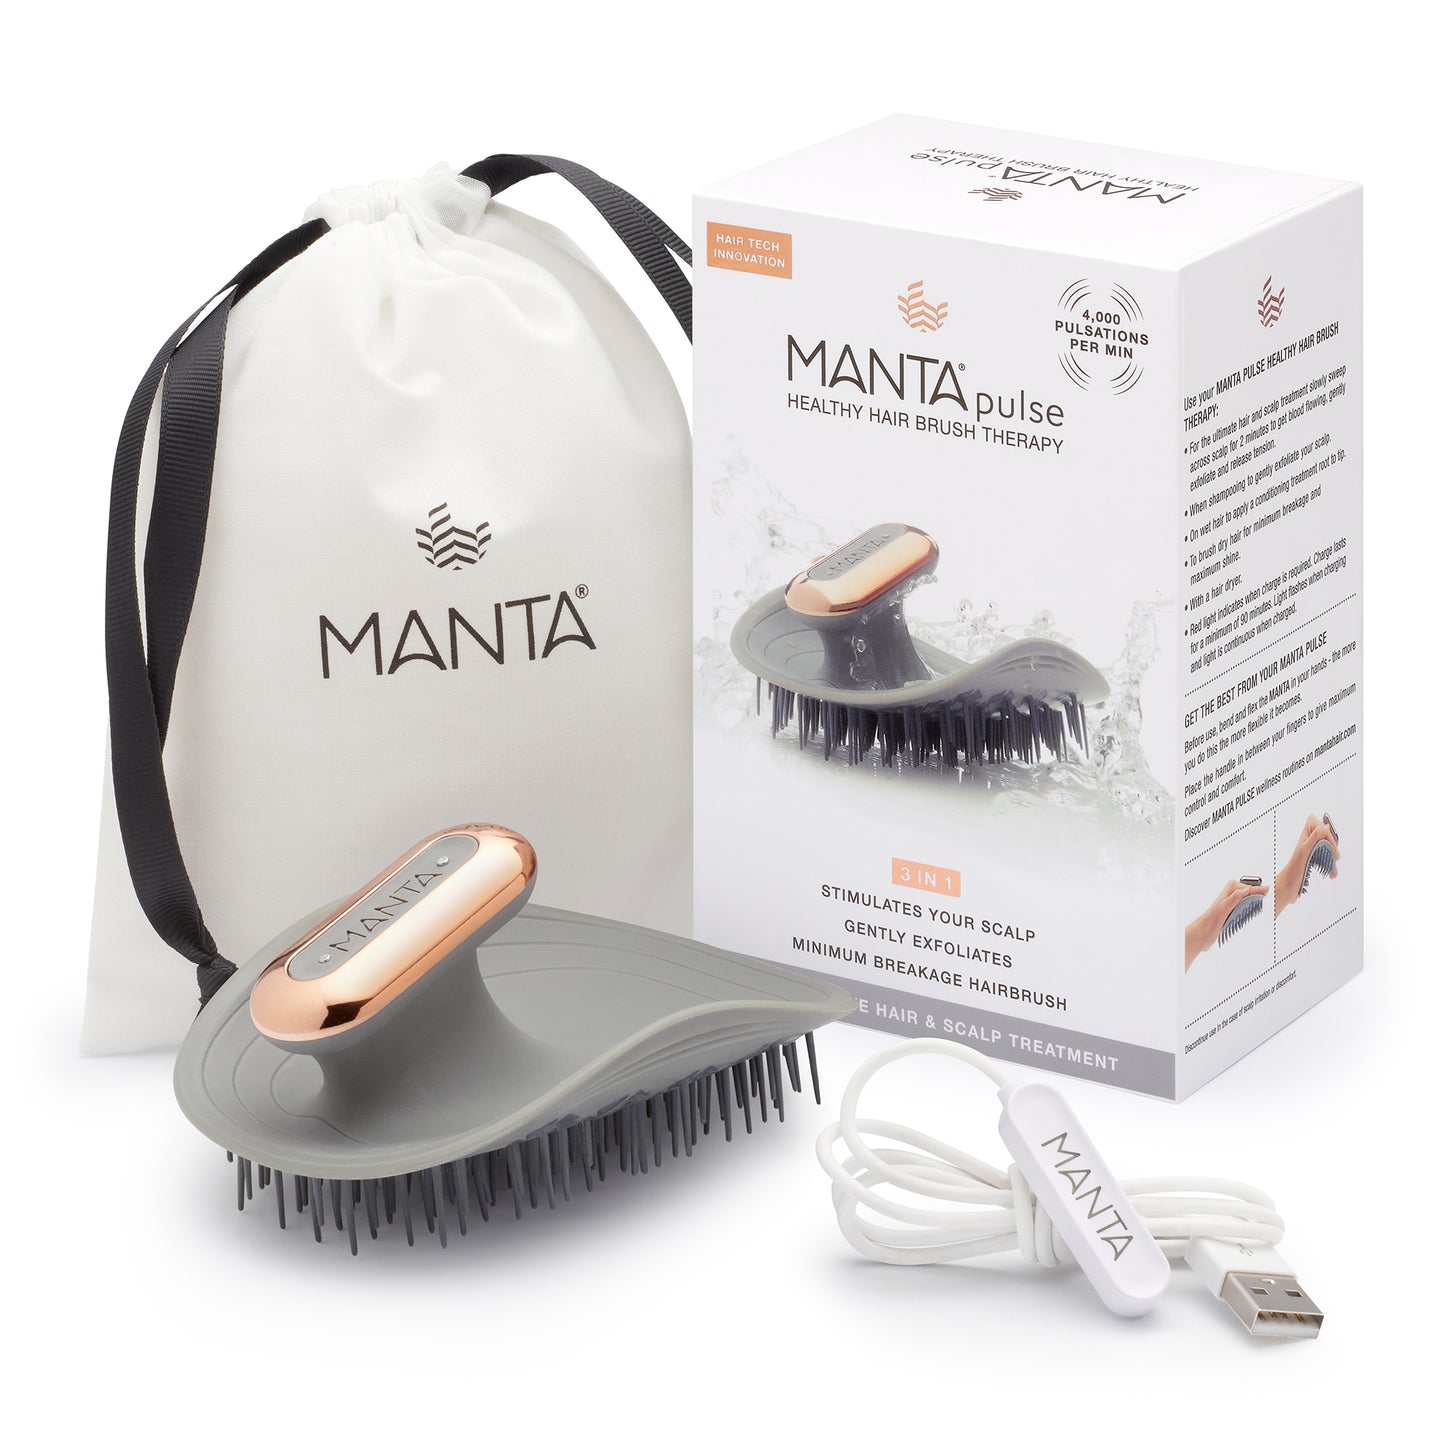 The Manta PULSE Brush